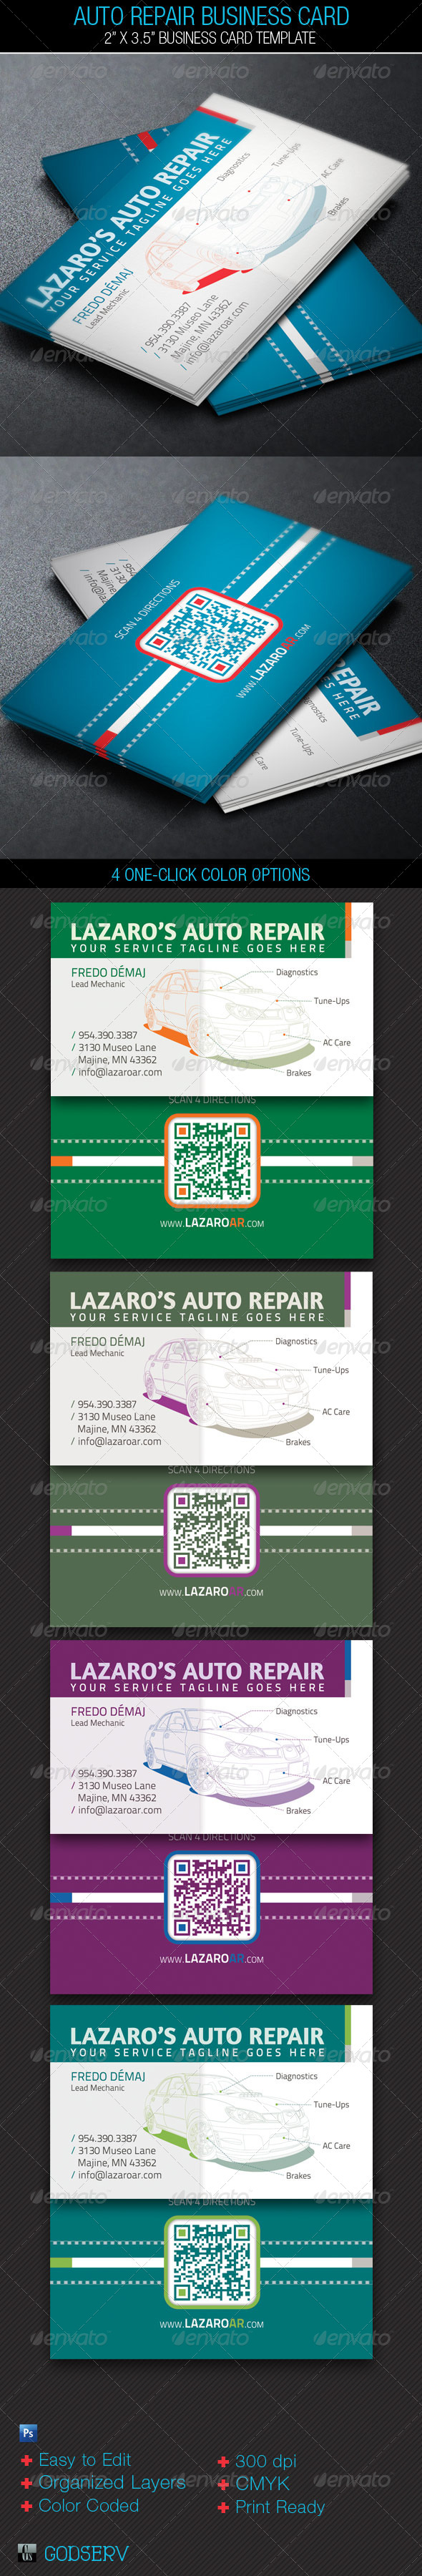 Auto Repair Service Business Card Template